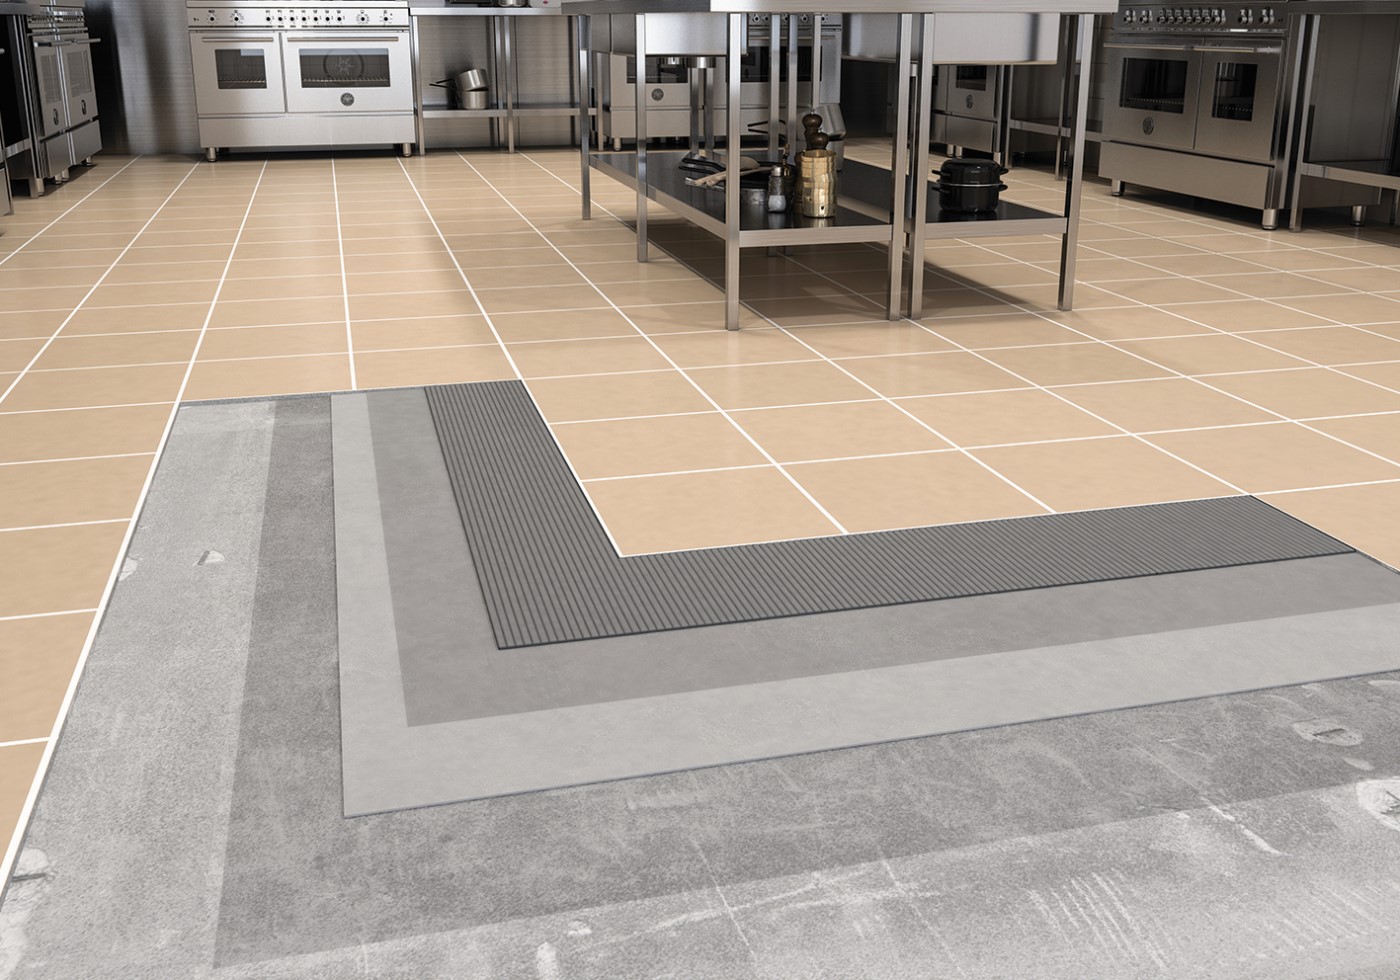 Ceramic Tile Application Solutions in Rough Floors